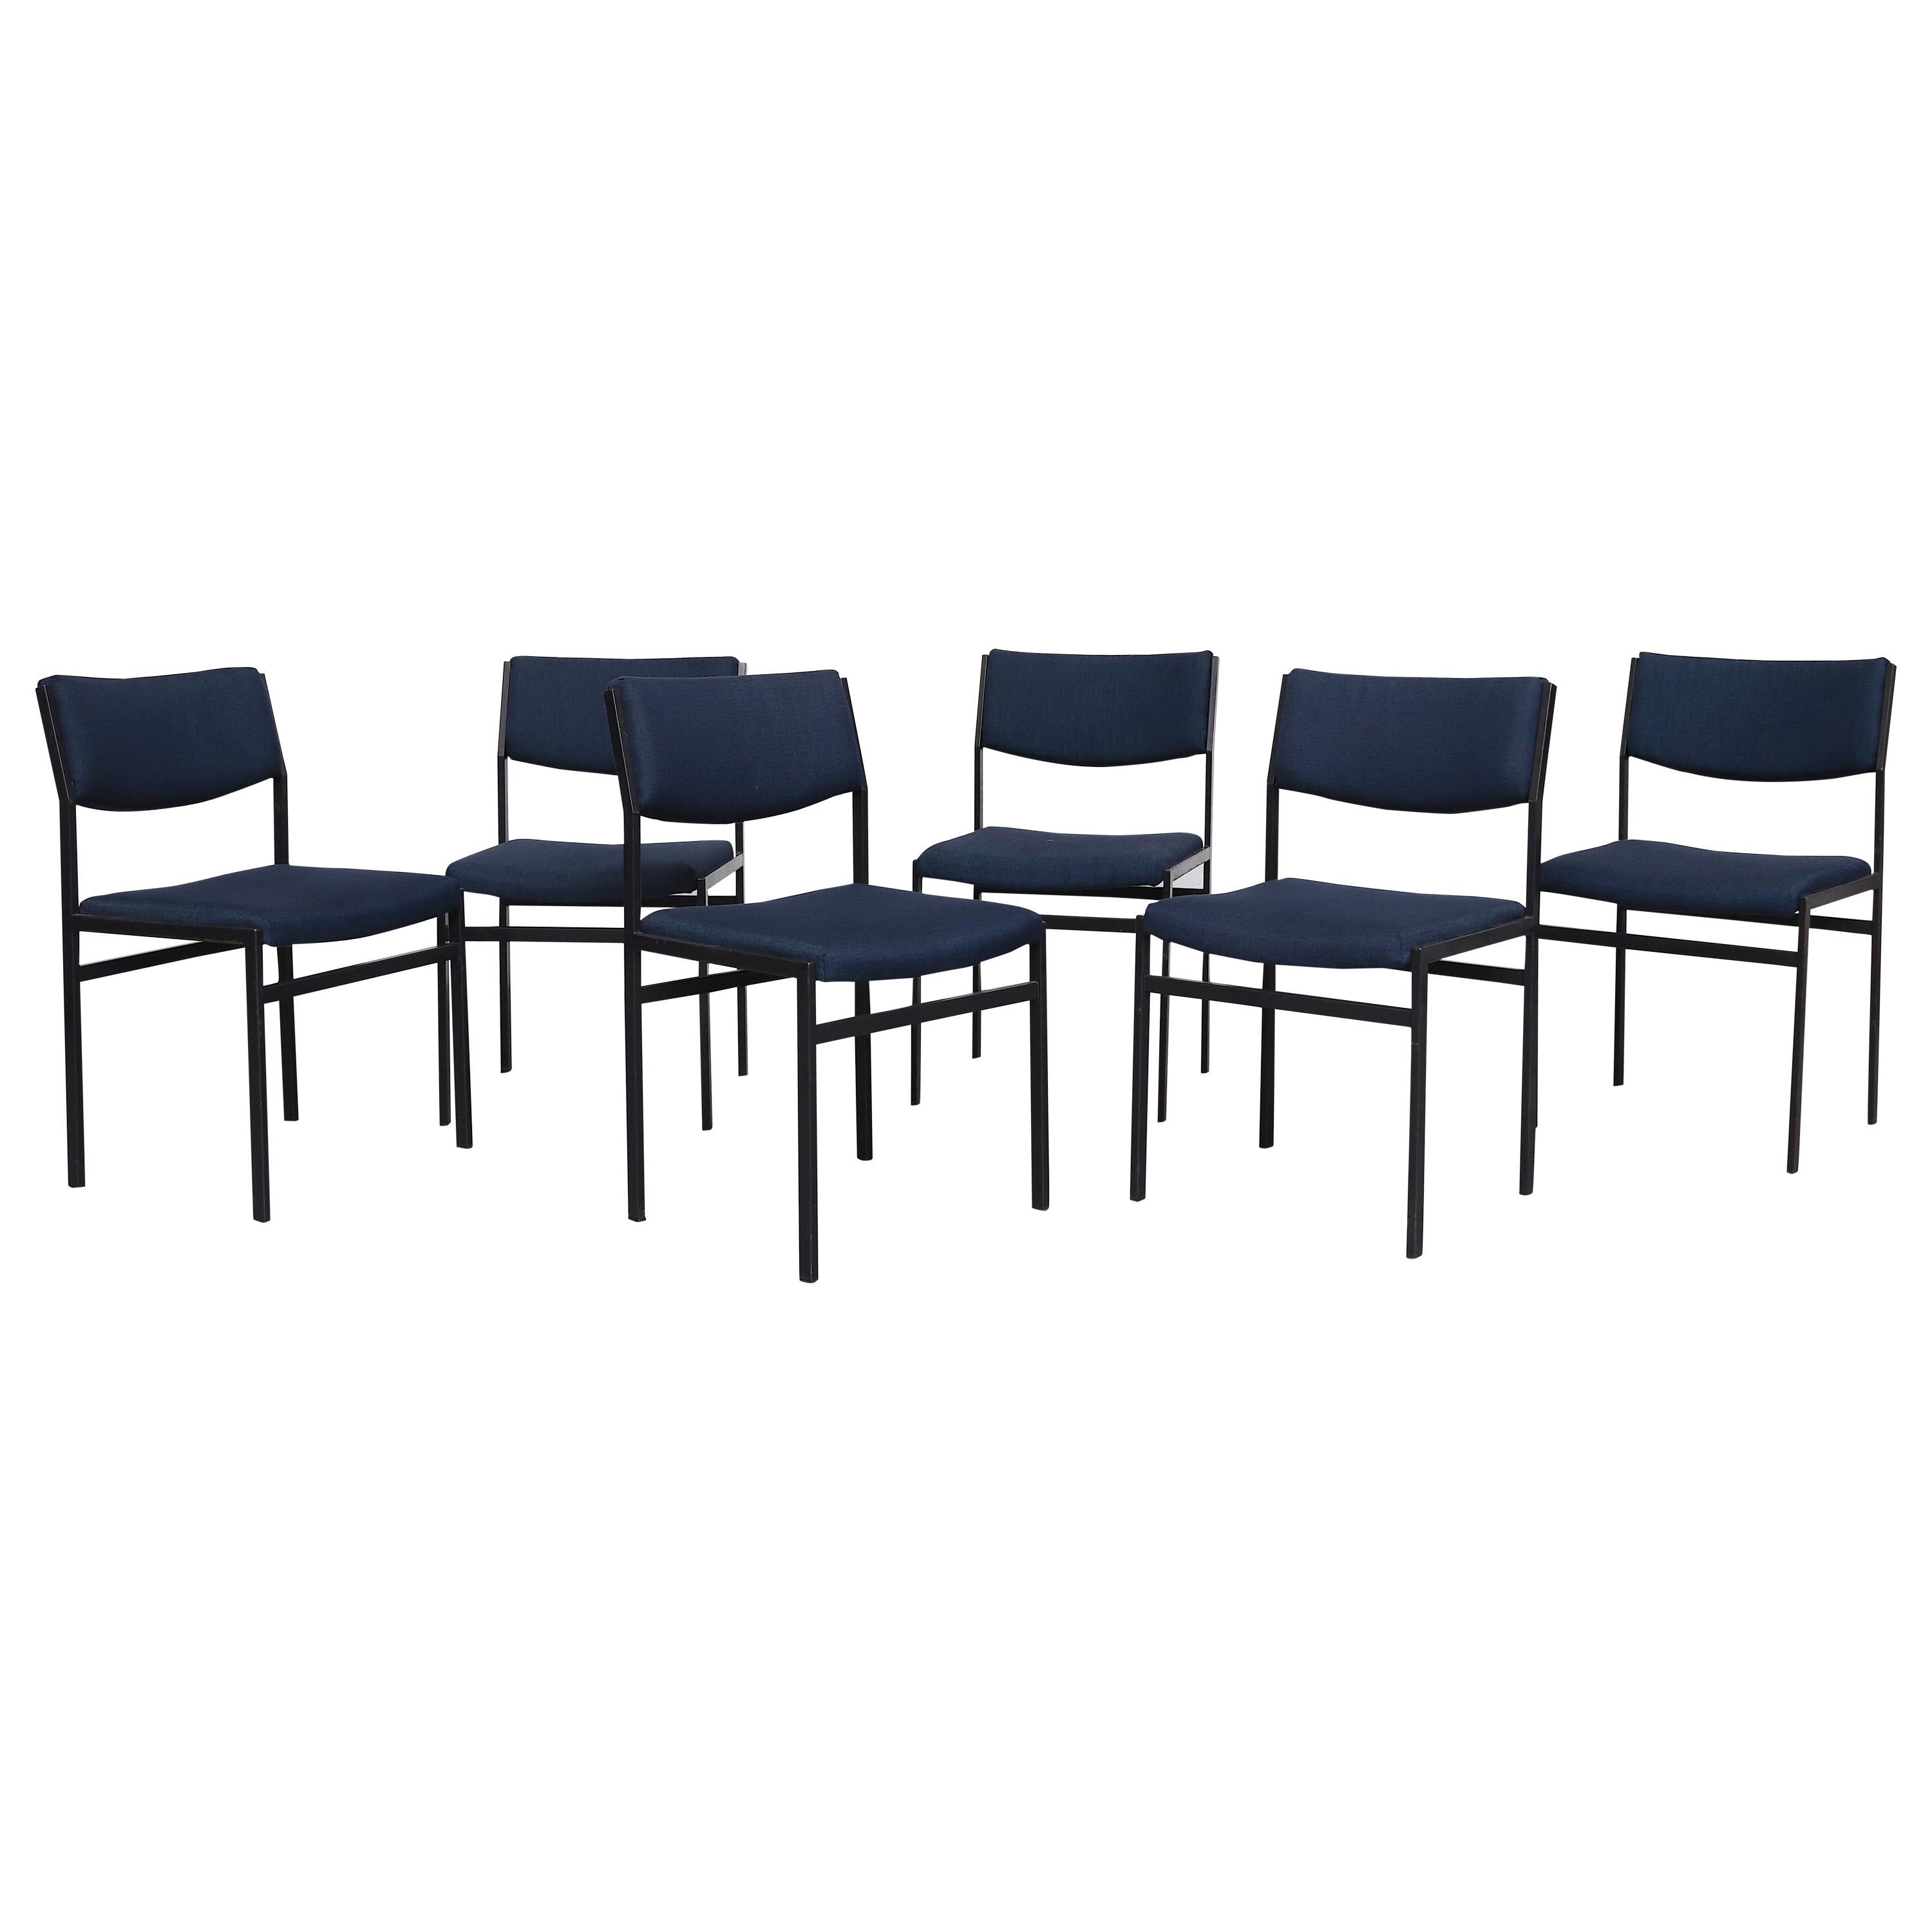 Set of 6 Gijs van der Sluis 'Attributed' Dining Chairs in New Indigo Upholstery